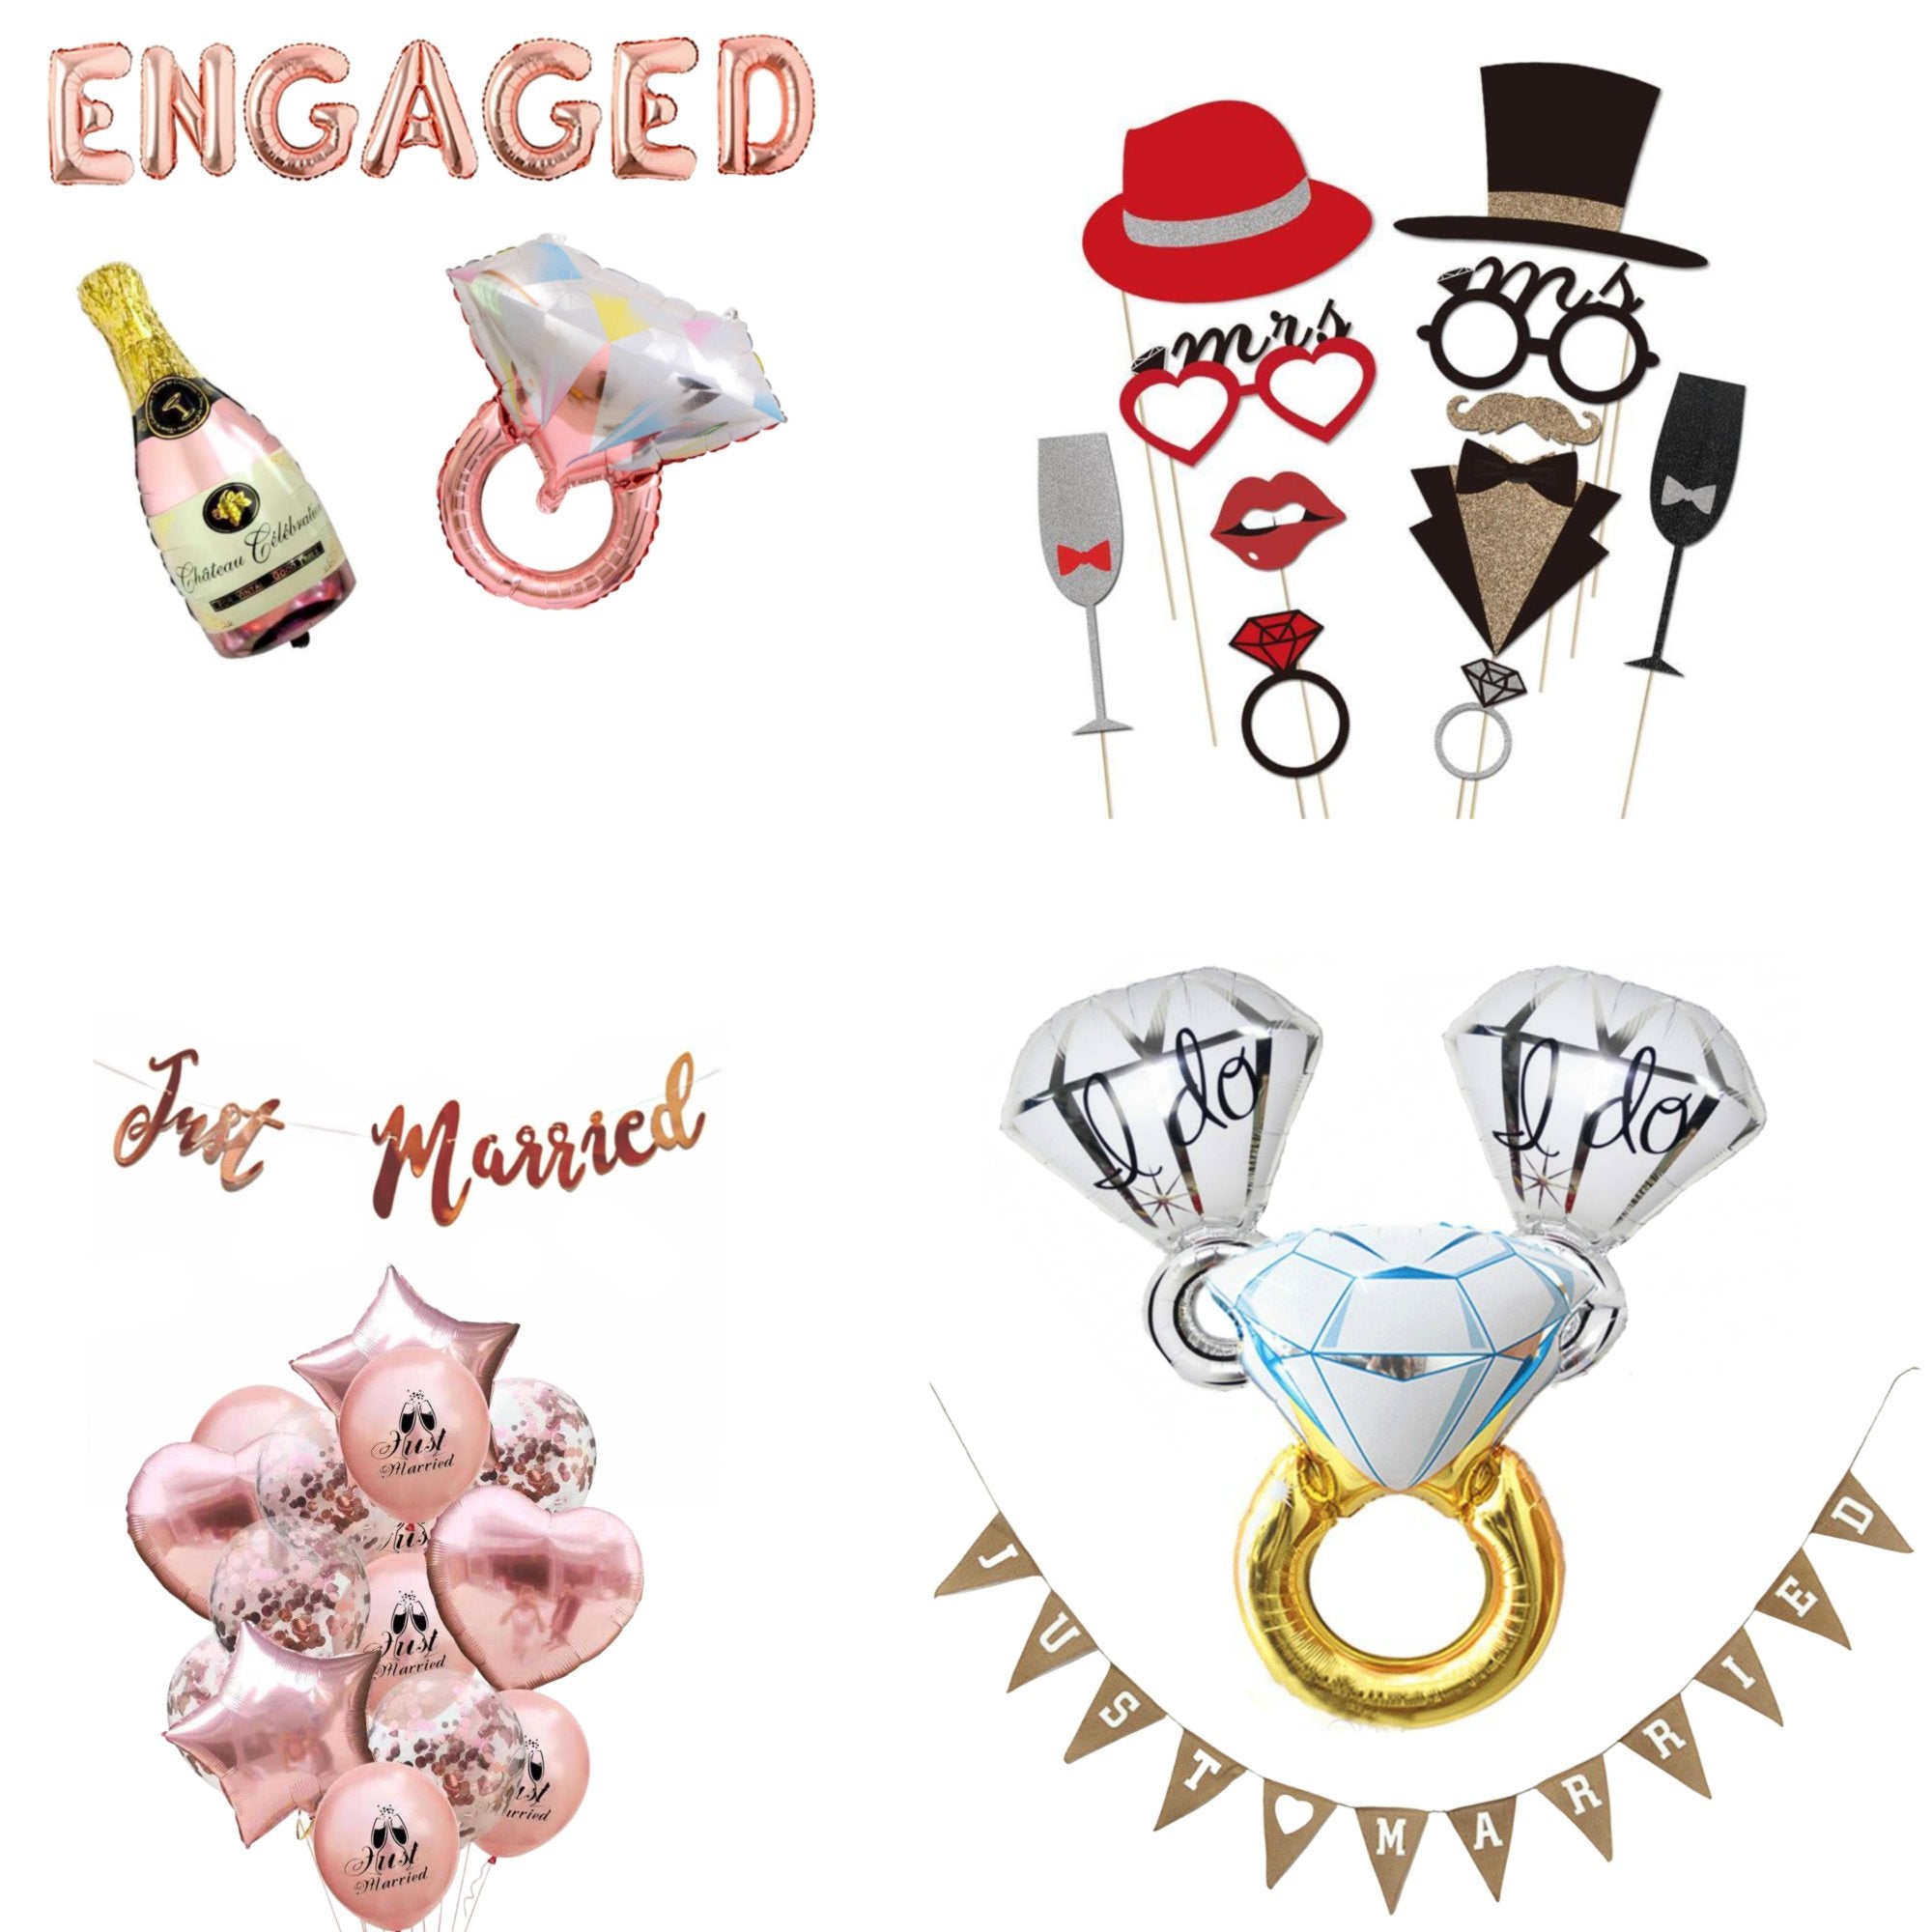 Wedding / Engagement Supplies